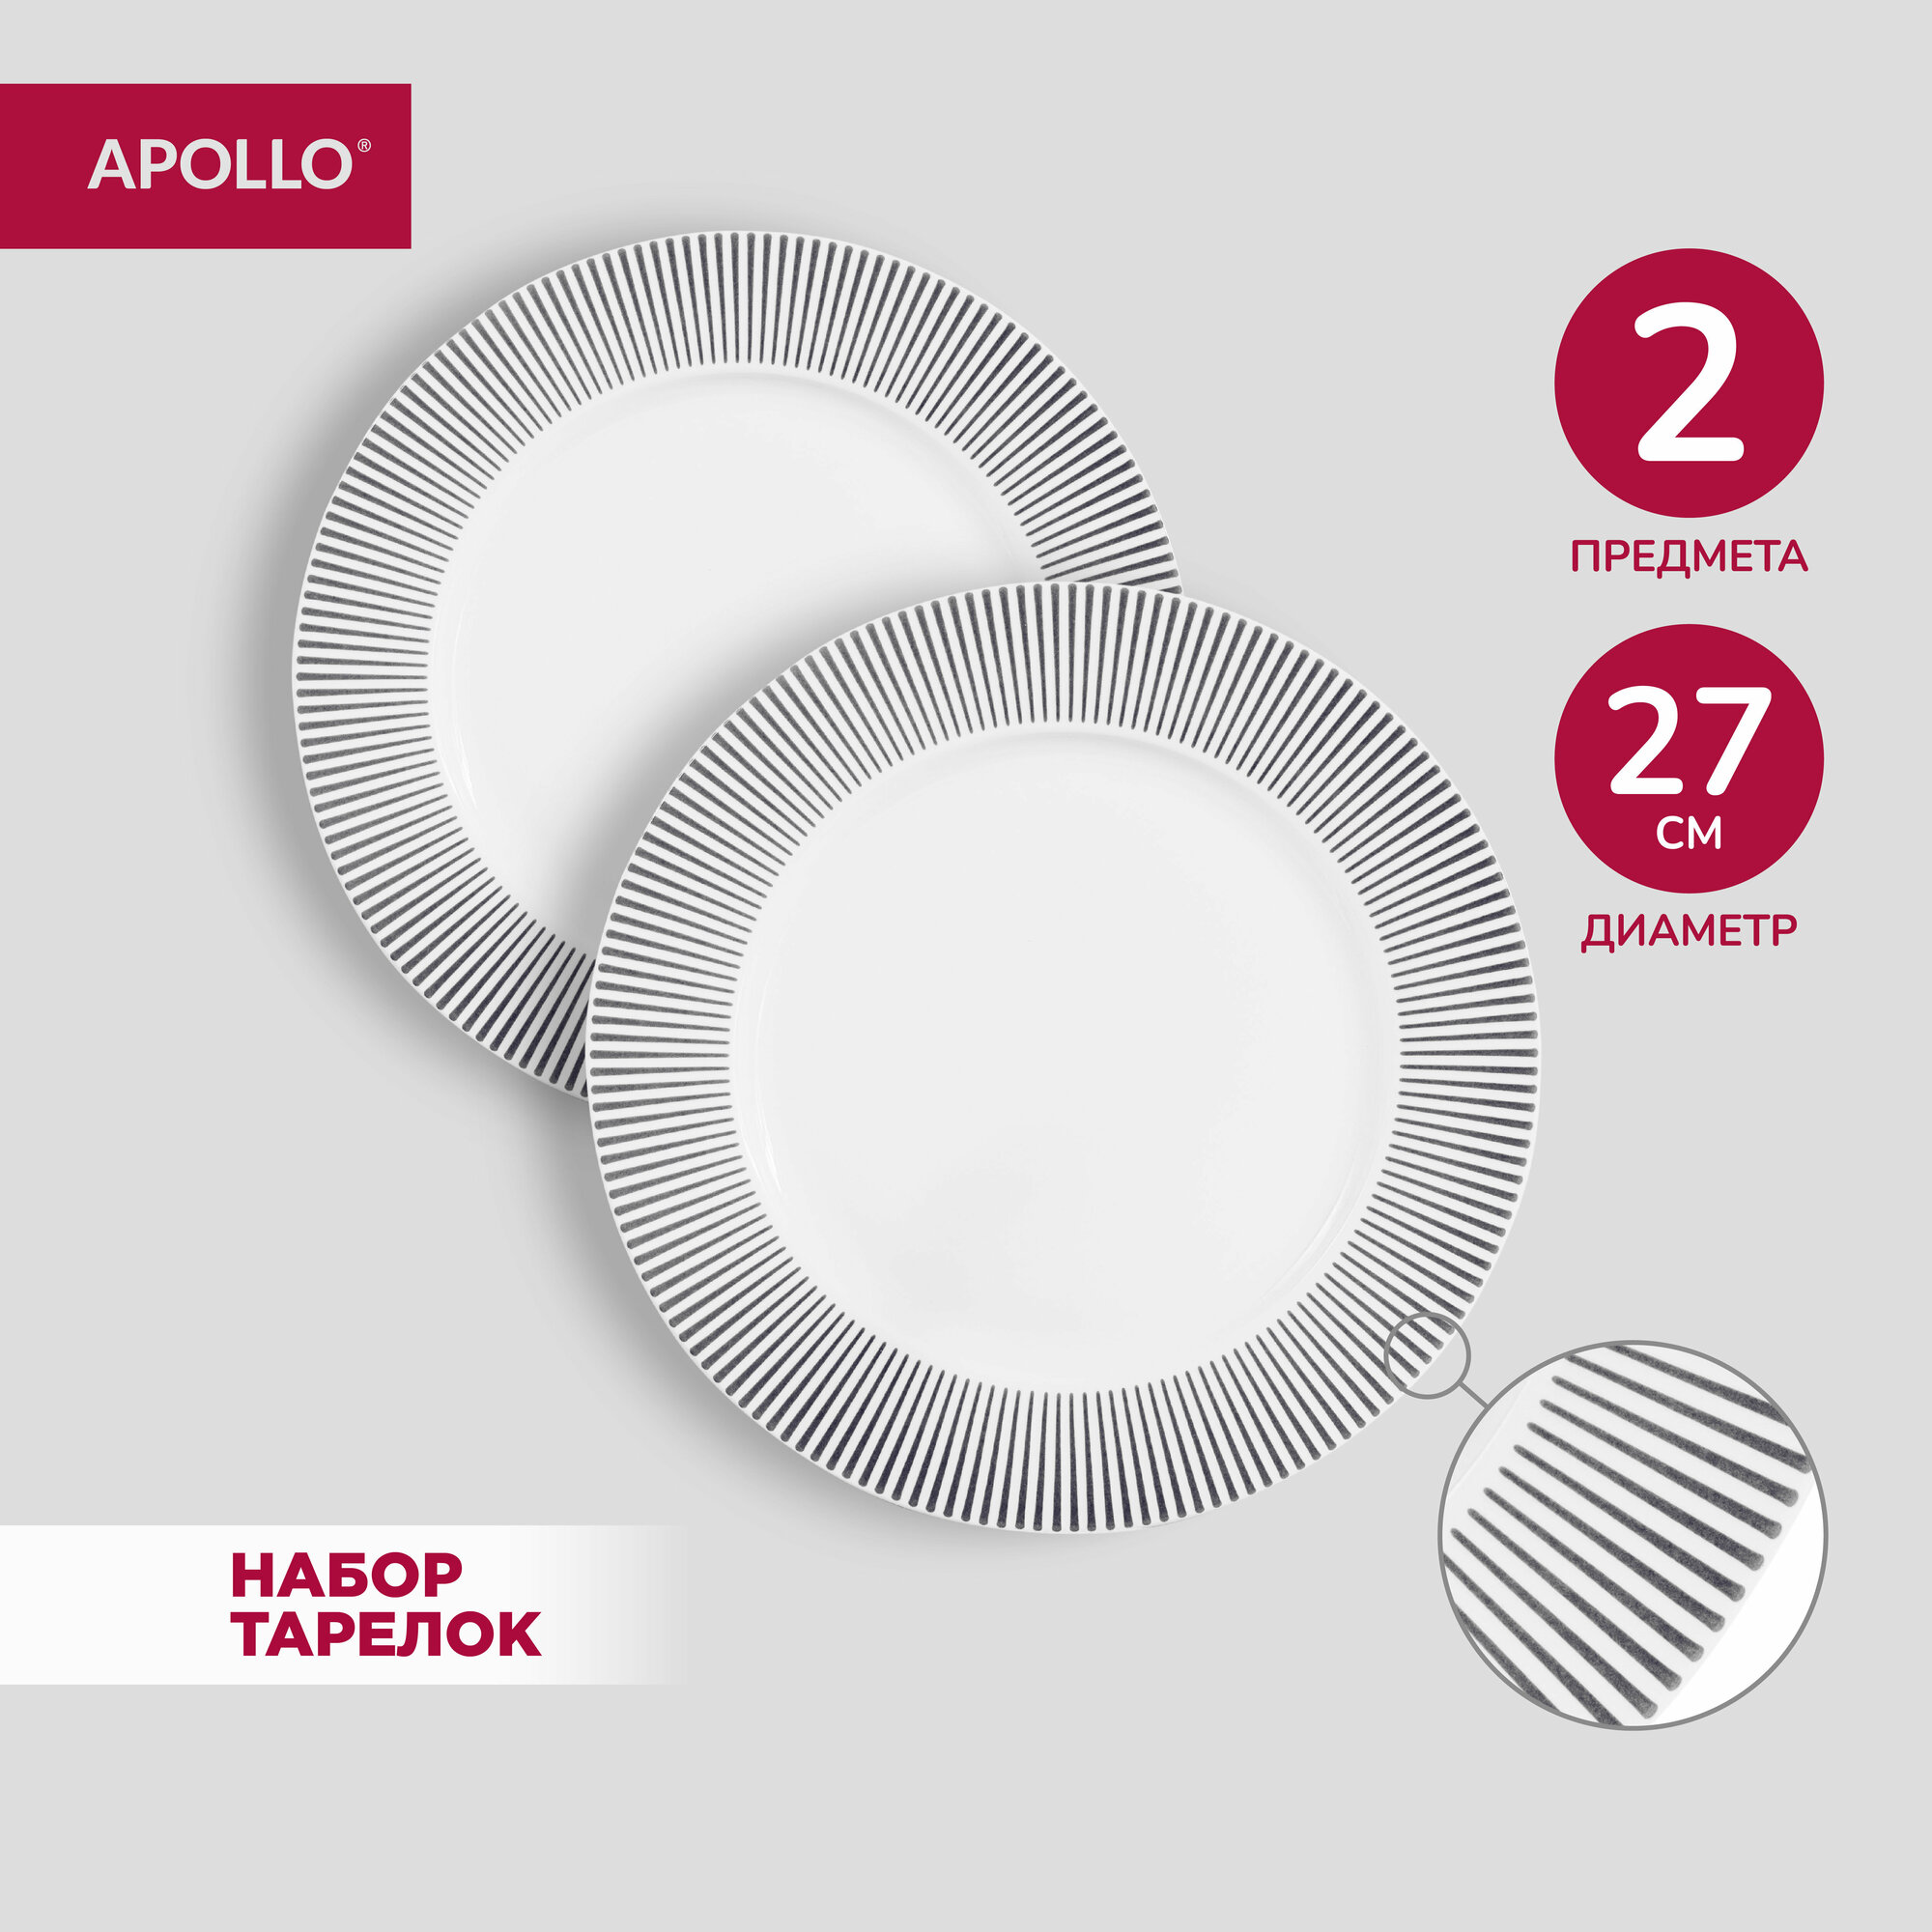 Тарелка обеденная Apollo "Stripes", 2 шт тарелки в наборе, диаметр 27 см